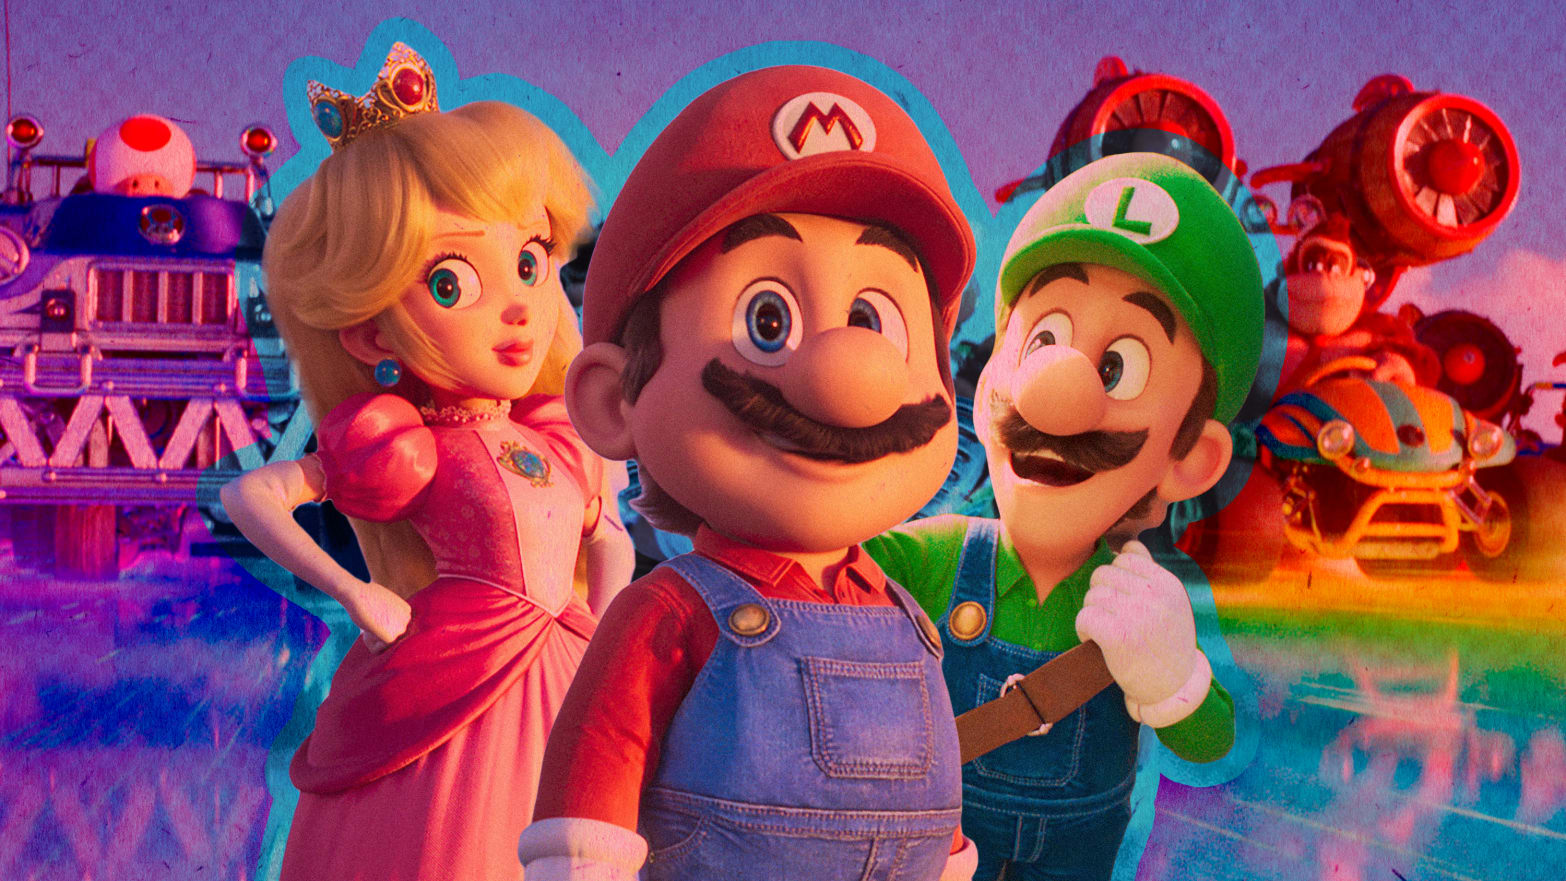 Super Mario Bros. Wonder review: Equal parts nostalgia and novelty